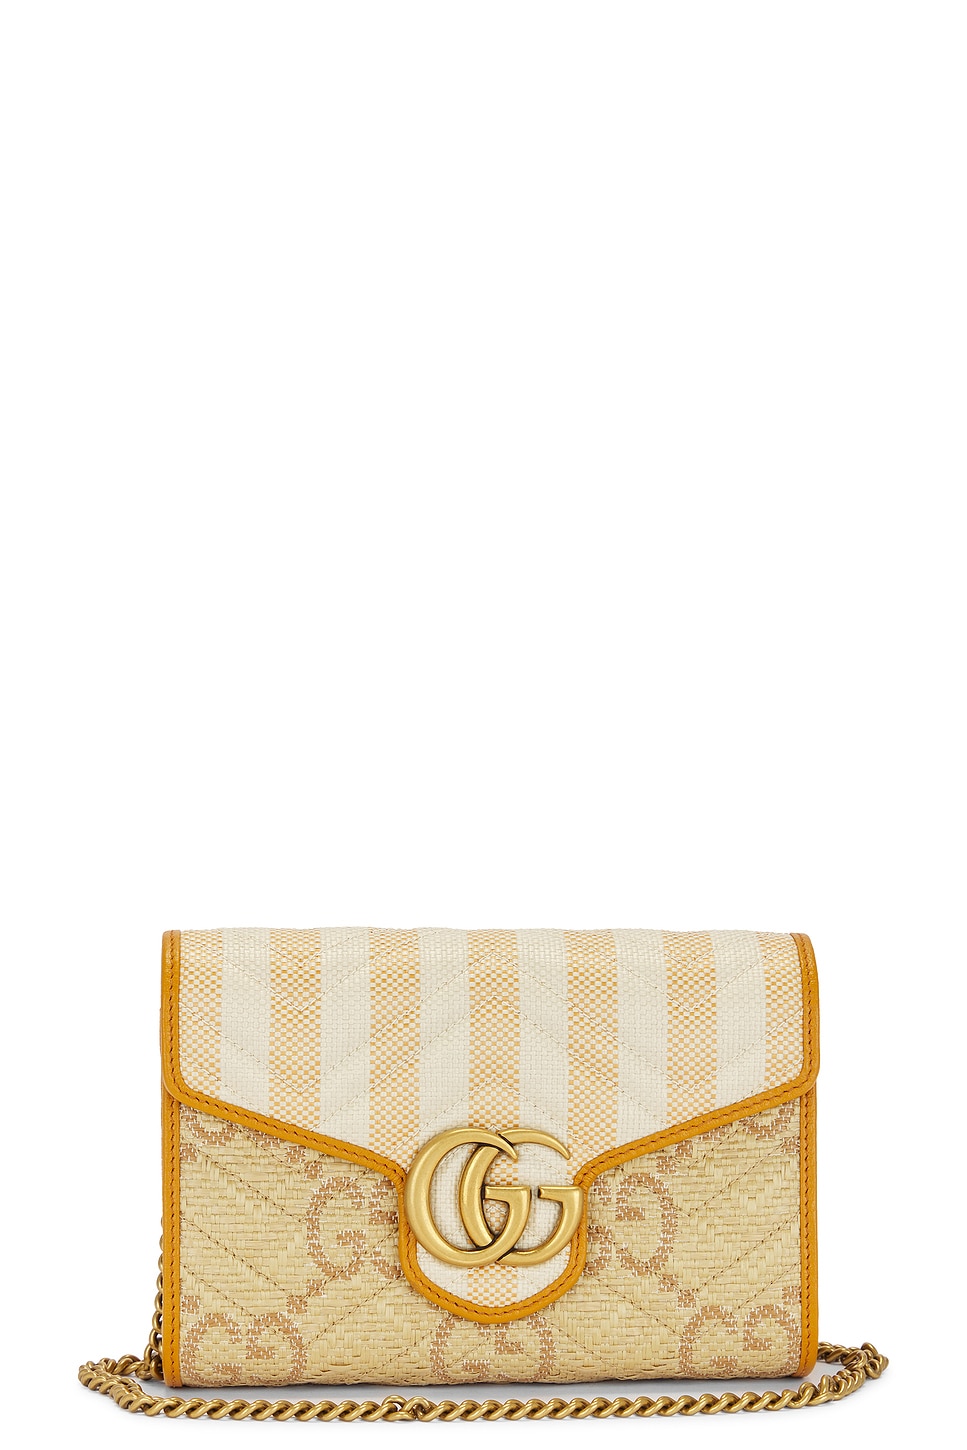 Gucci Marmont Chain Shoulder Bag In Beige